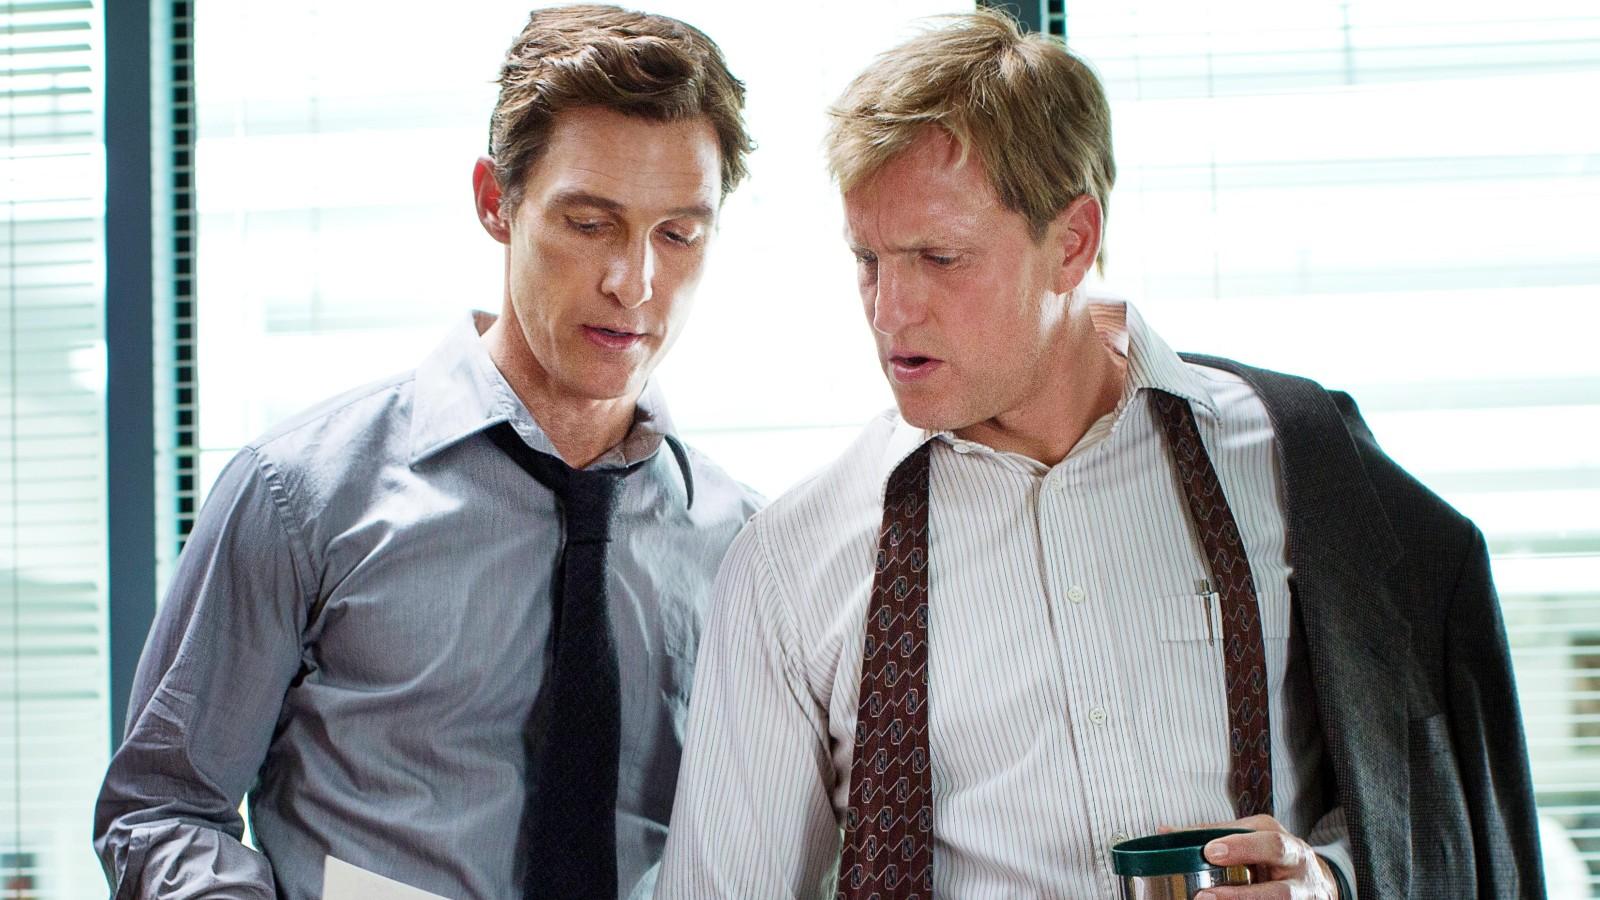 Matthew McConaughey and Woody Harrelson as cops in Season 1 of True Detective.